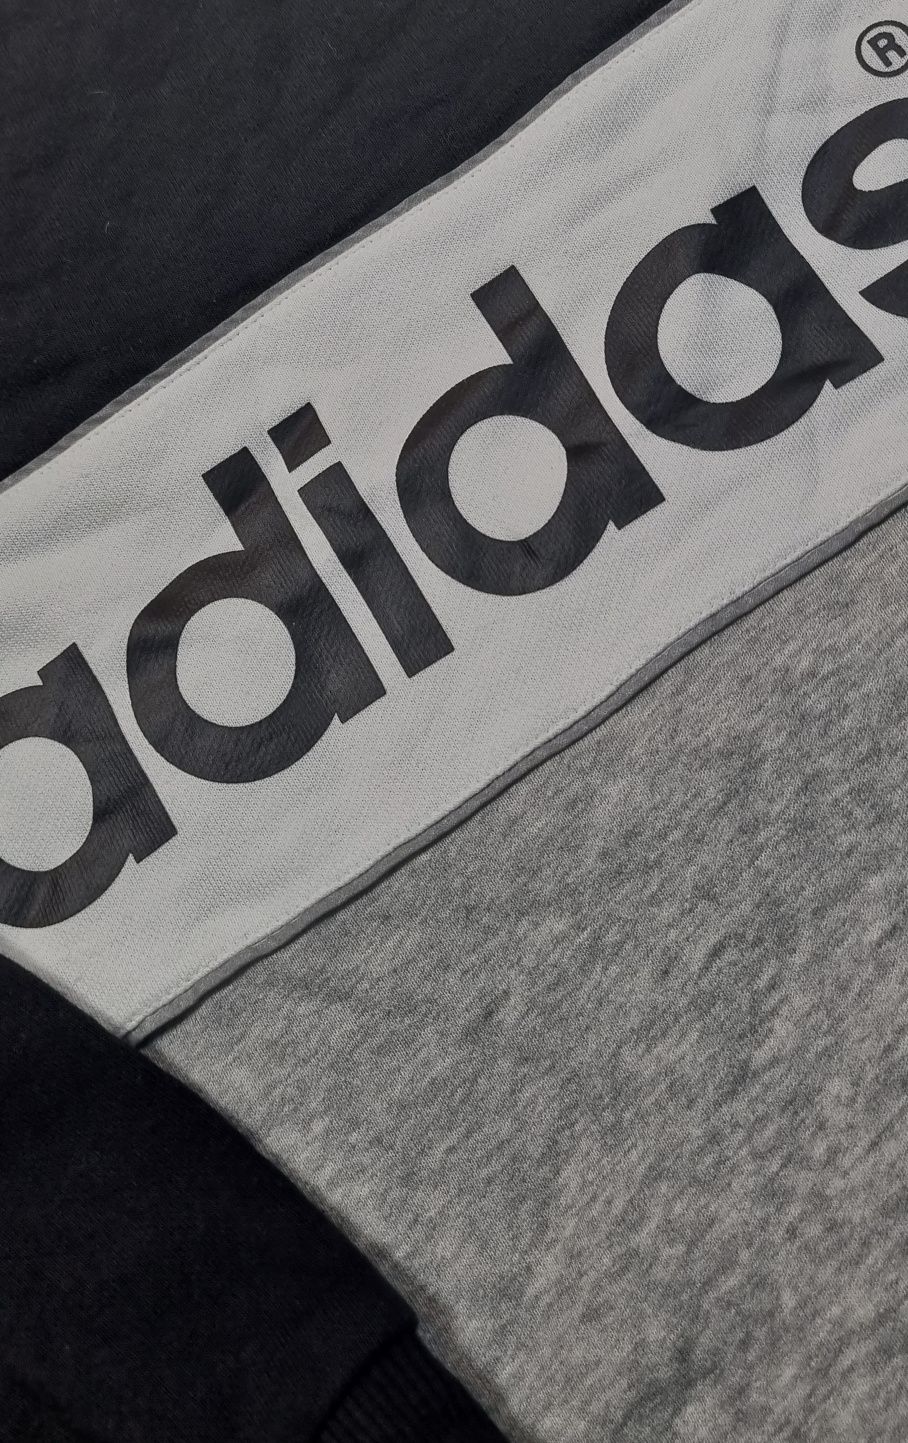 Bluza męska Adidas, bez kaptura, crewneck, logo